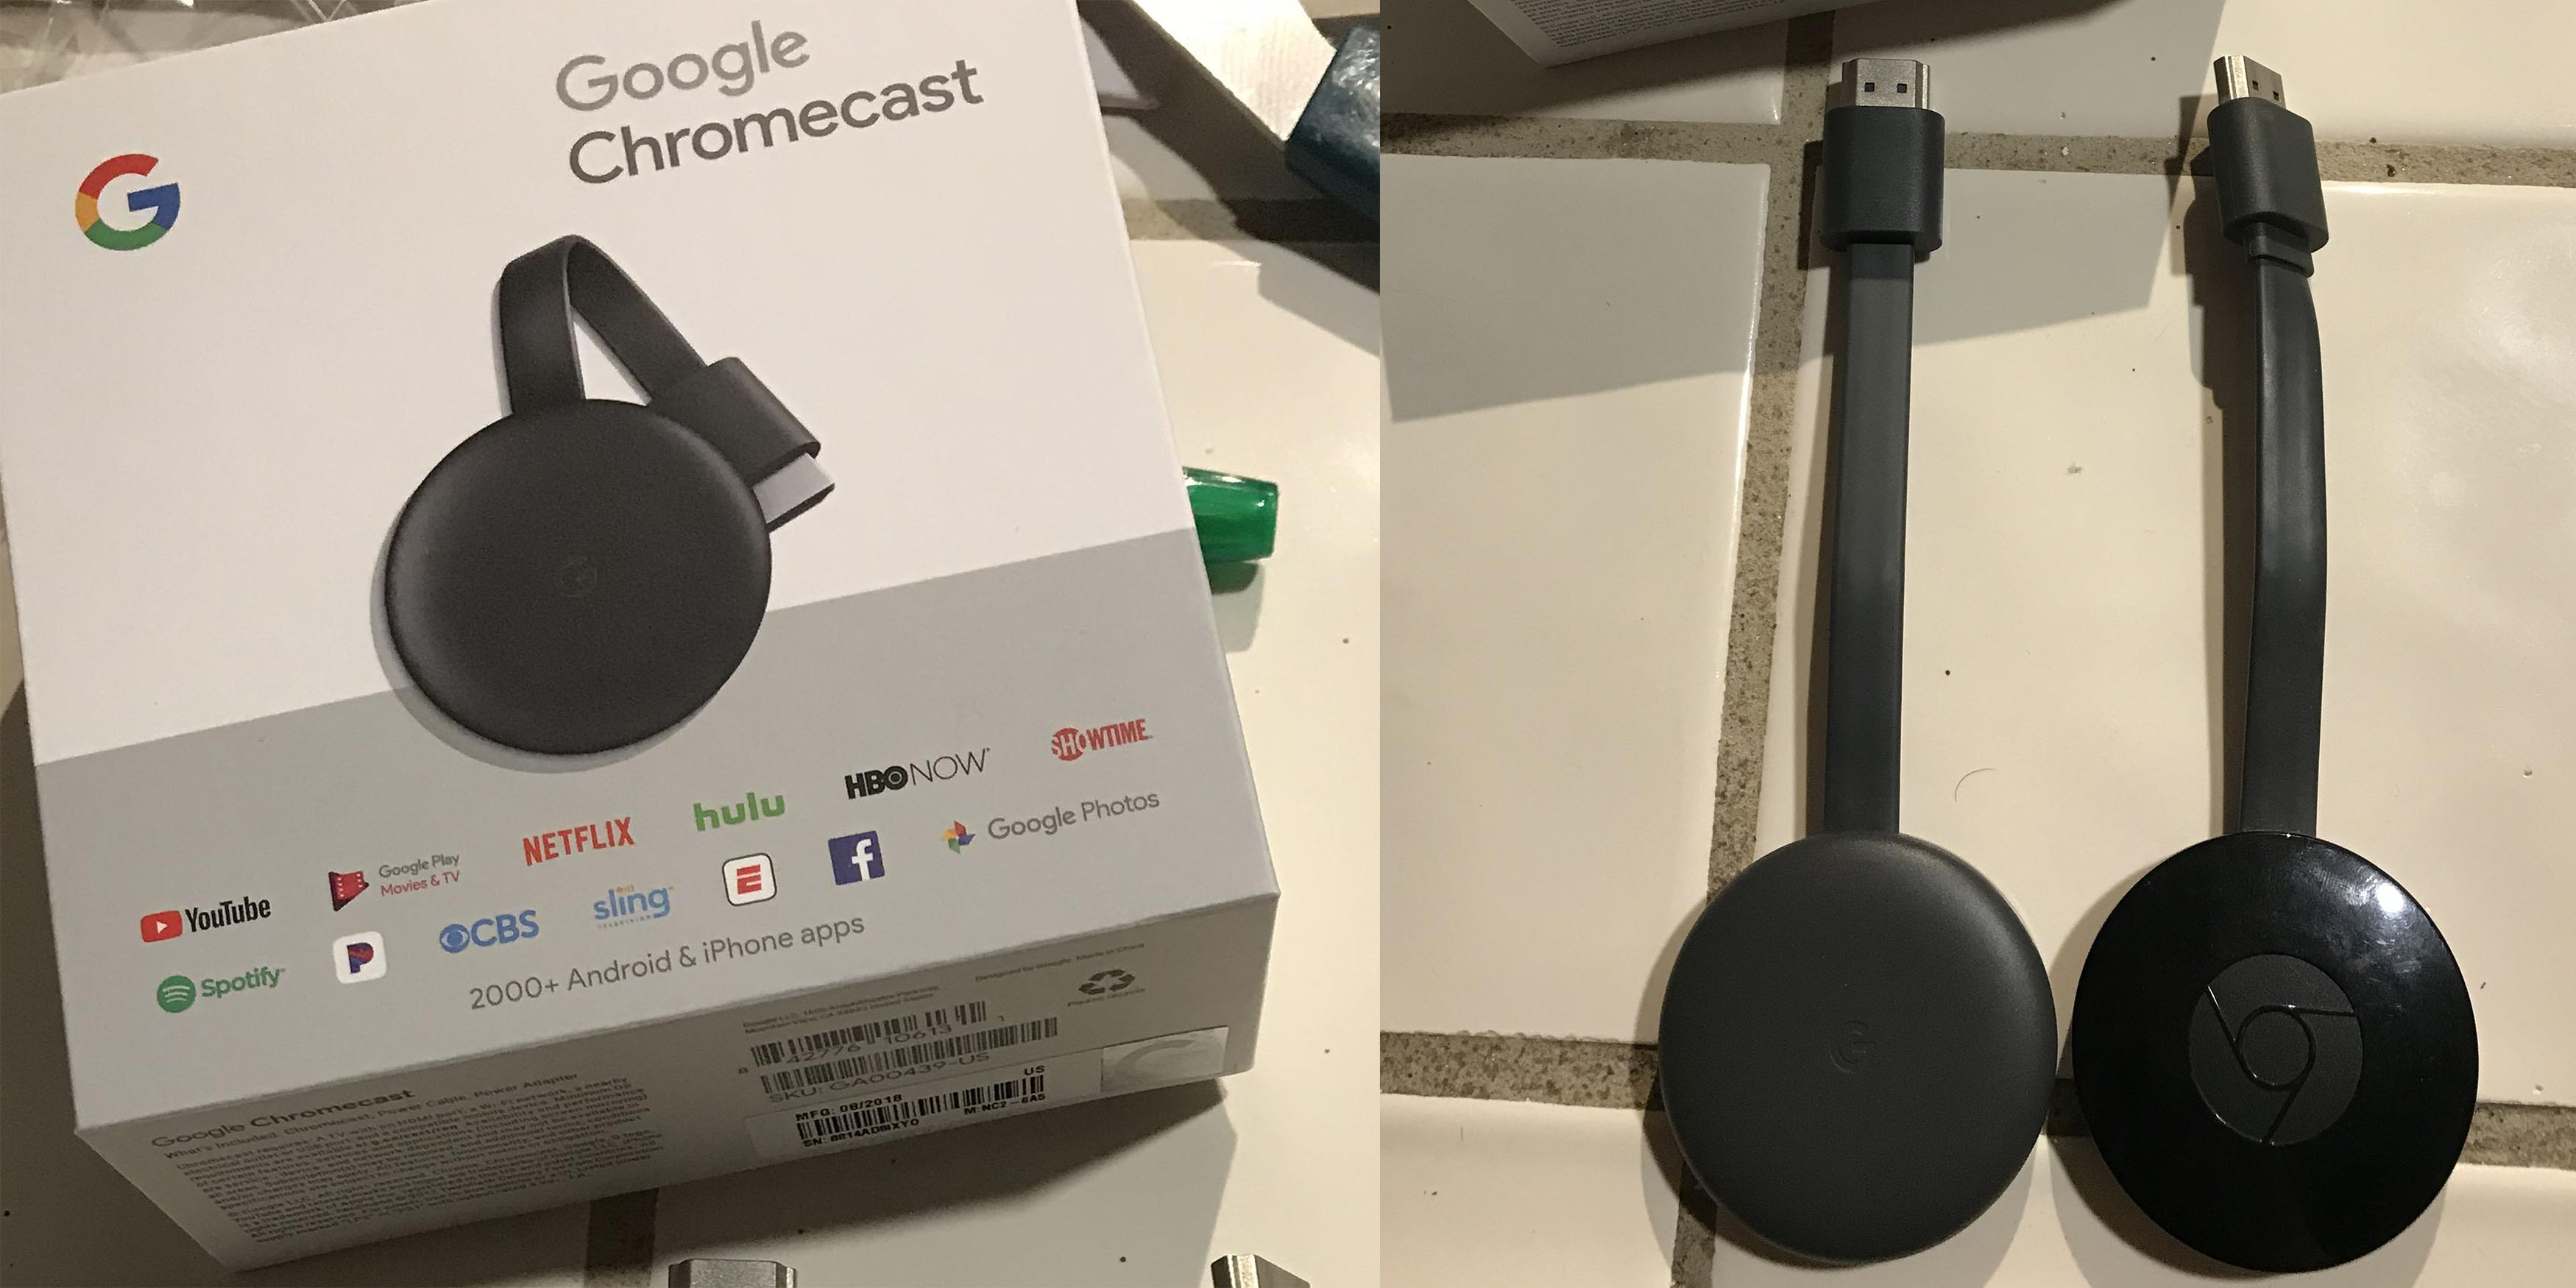 Chromecast leaks ahead of Google's launch -